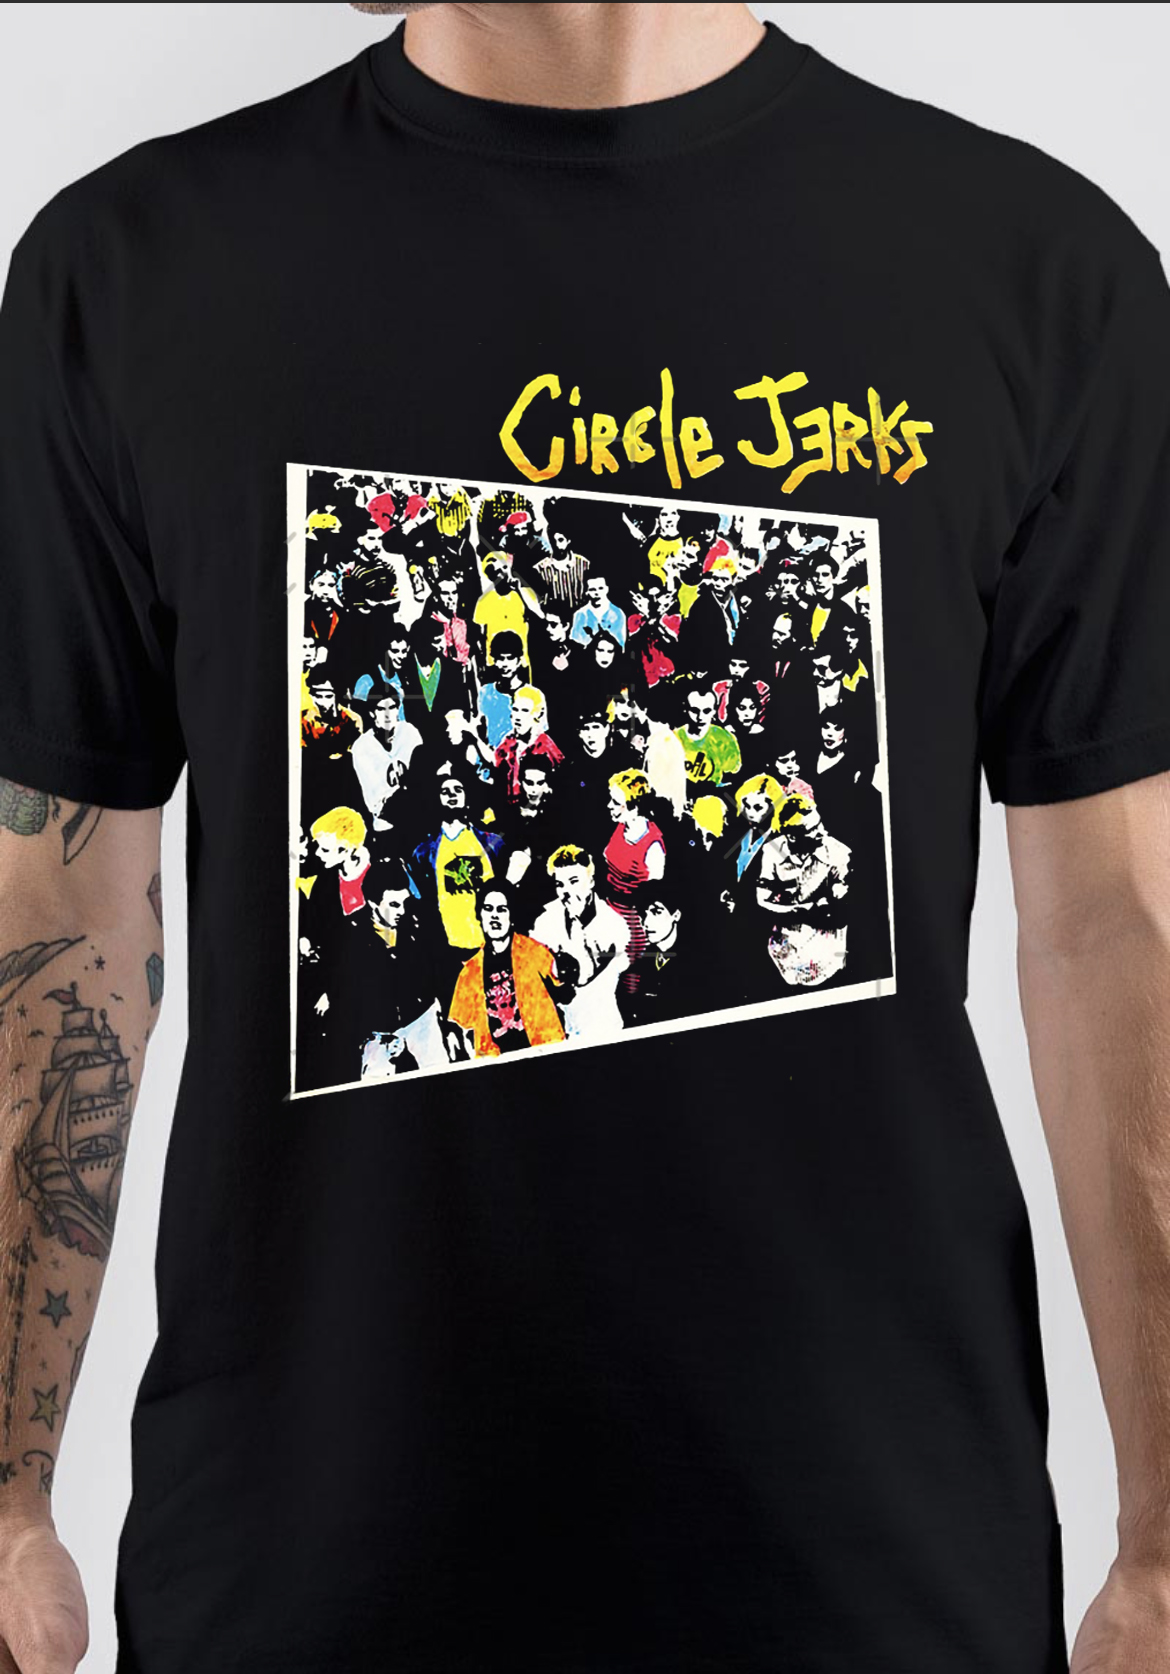 Circle Jerks T-Shirt